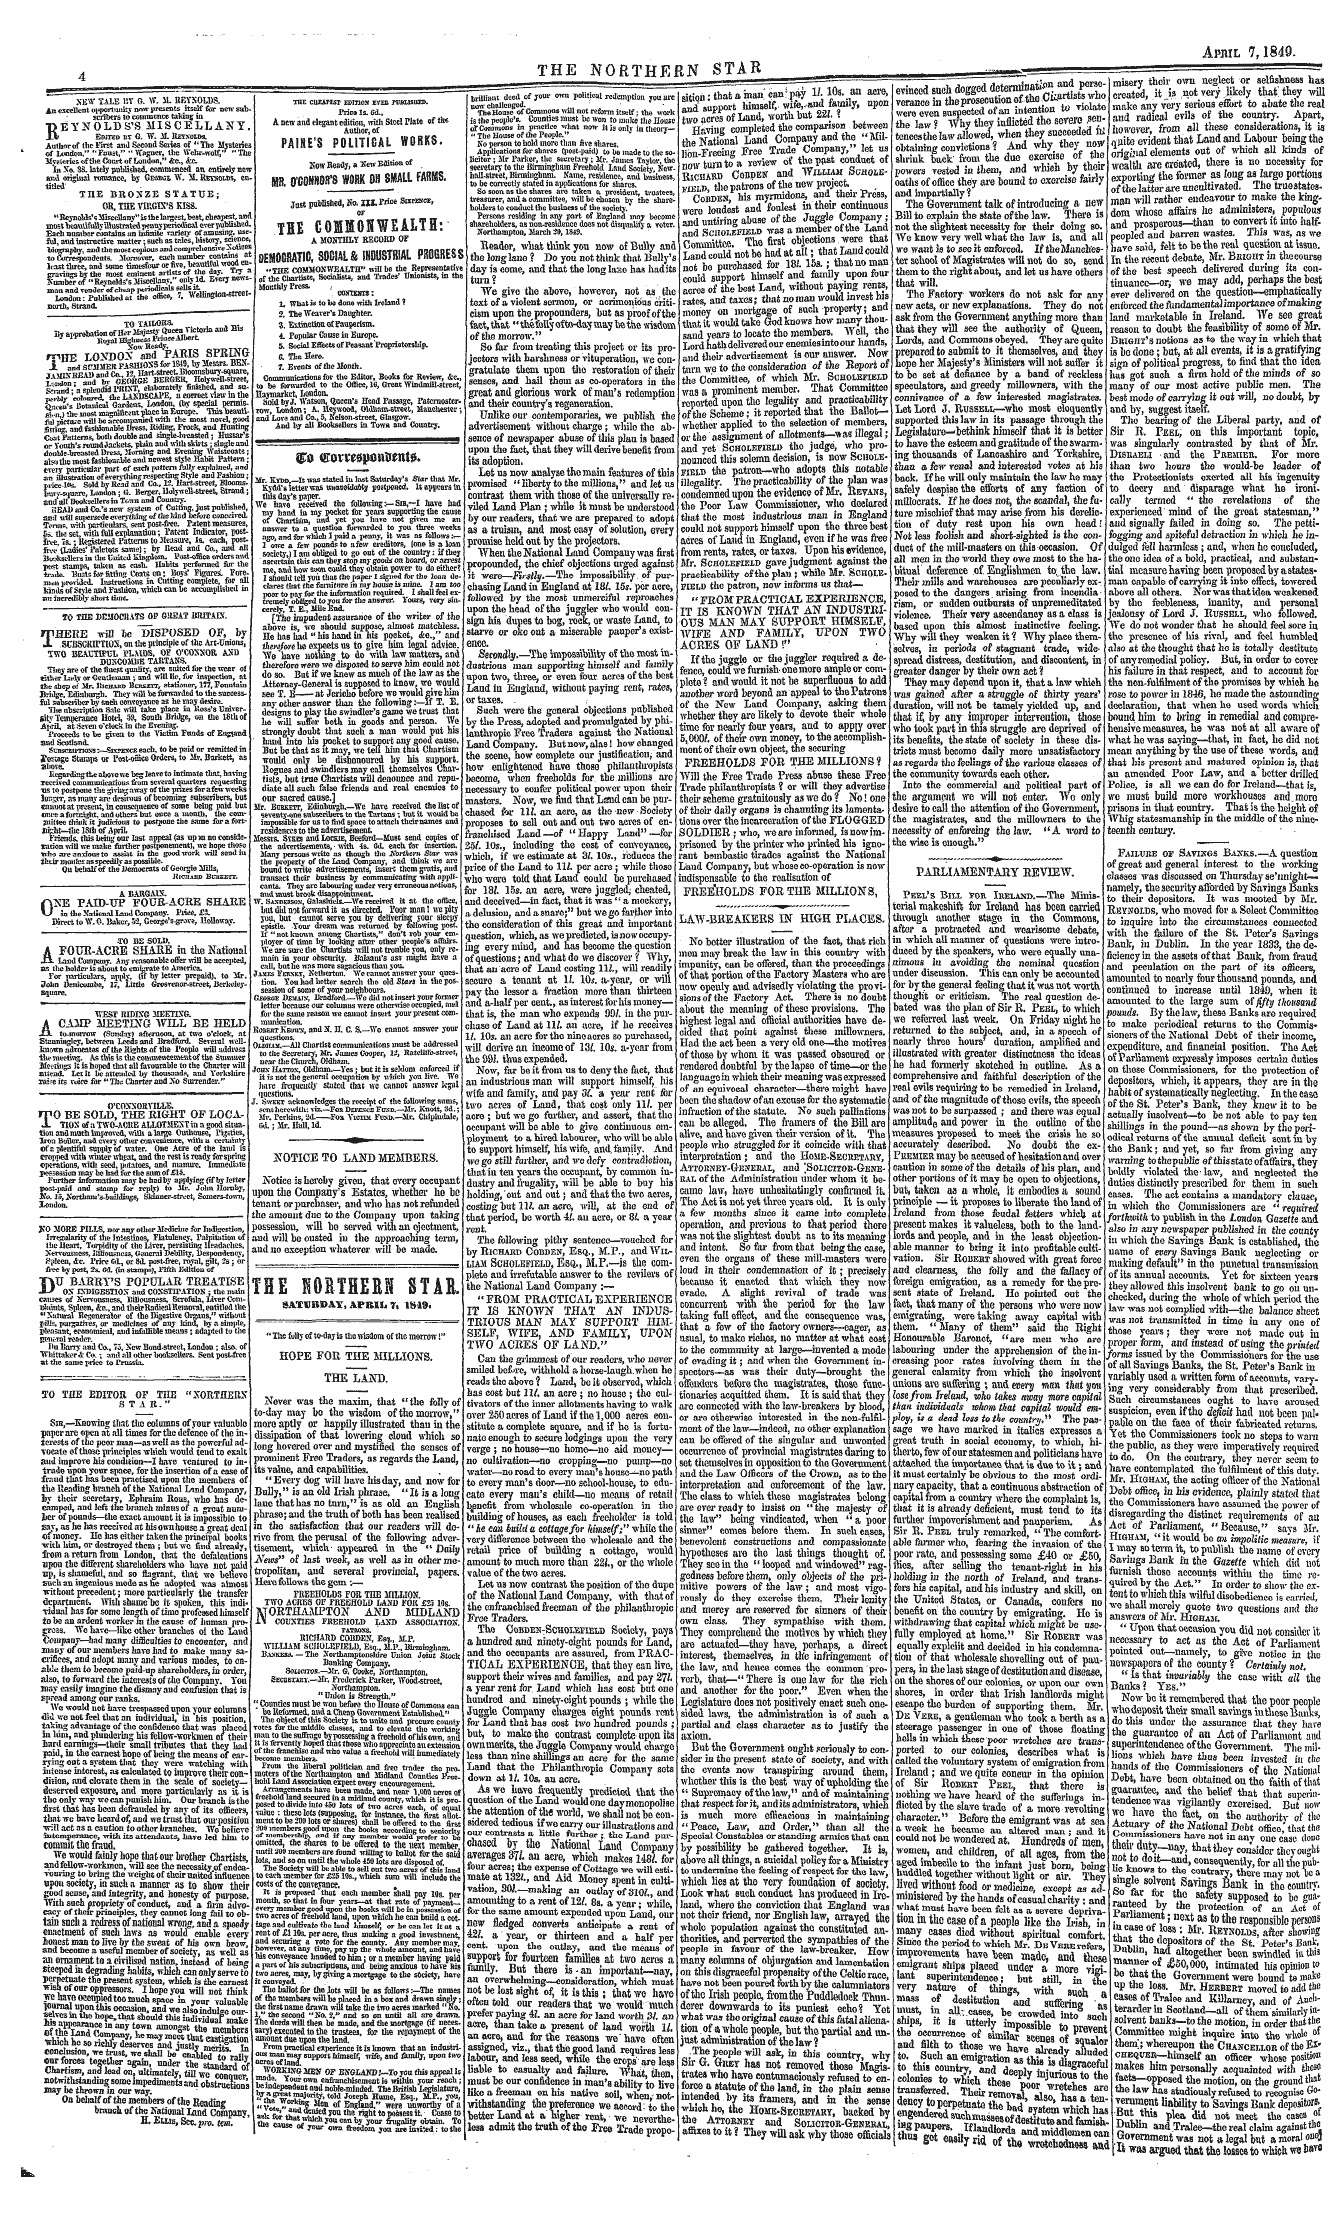 Northern Star (1837-1852): jS F Y, 3rd edition - Ad00417